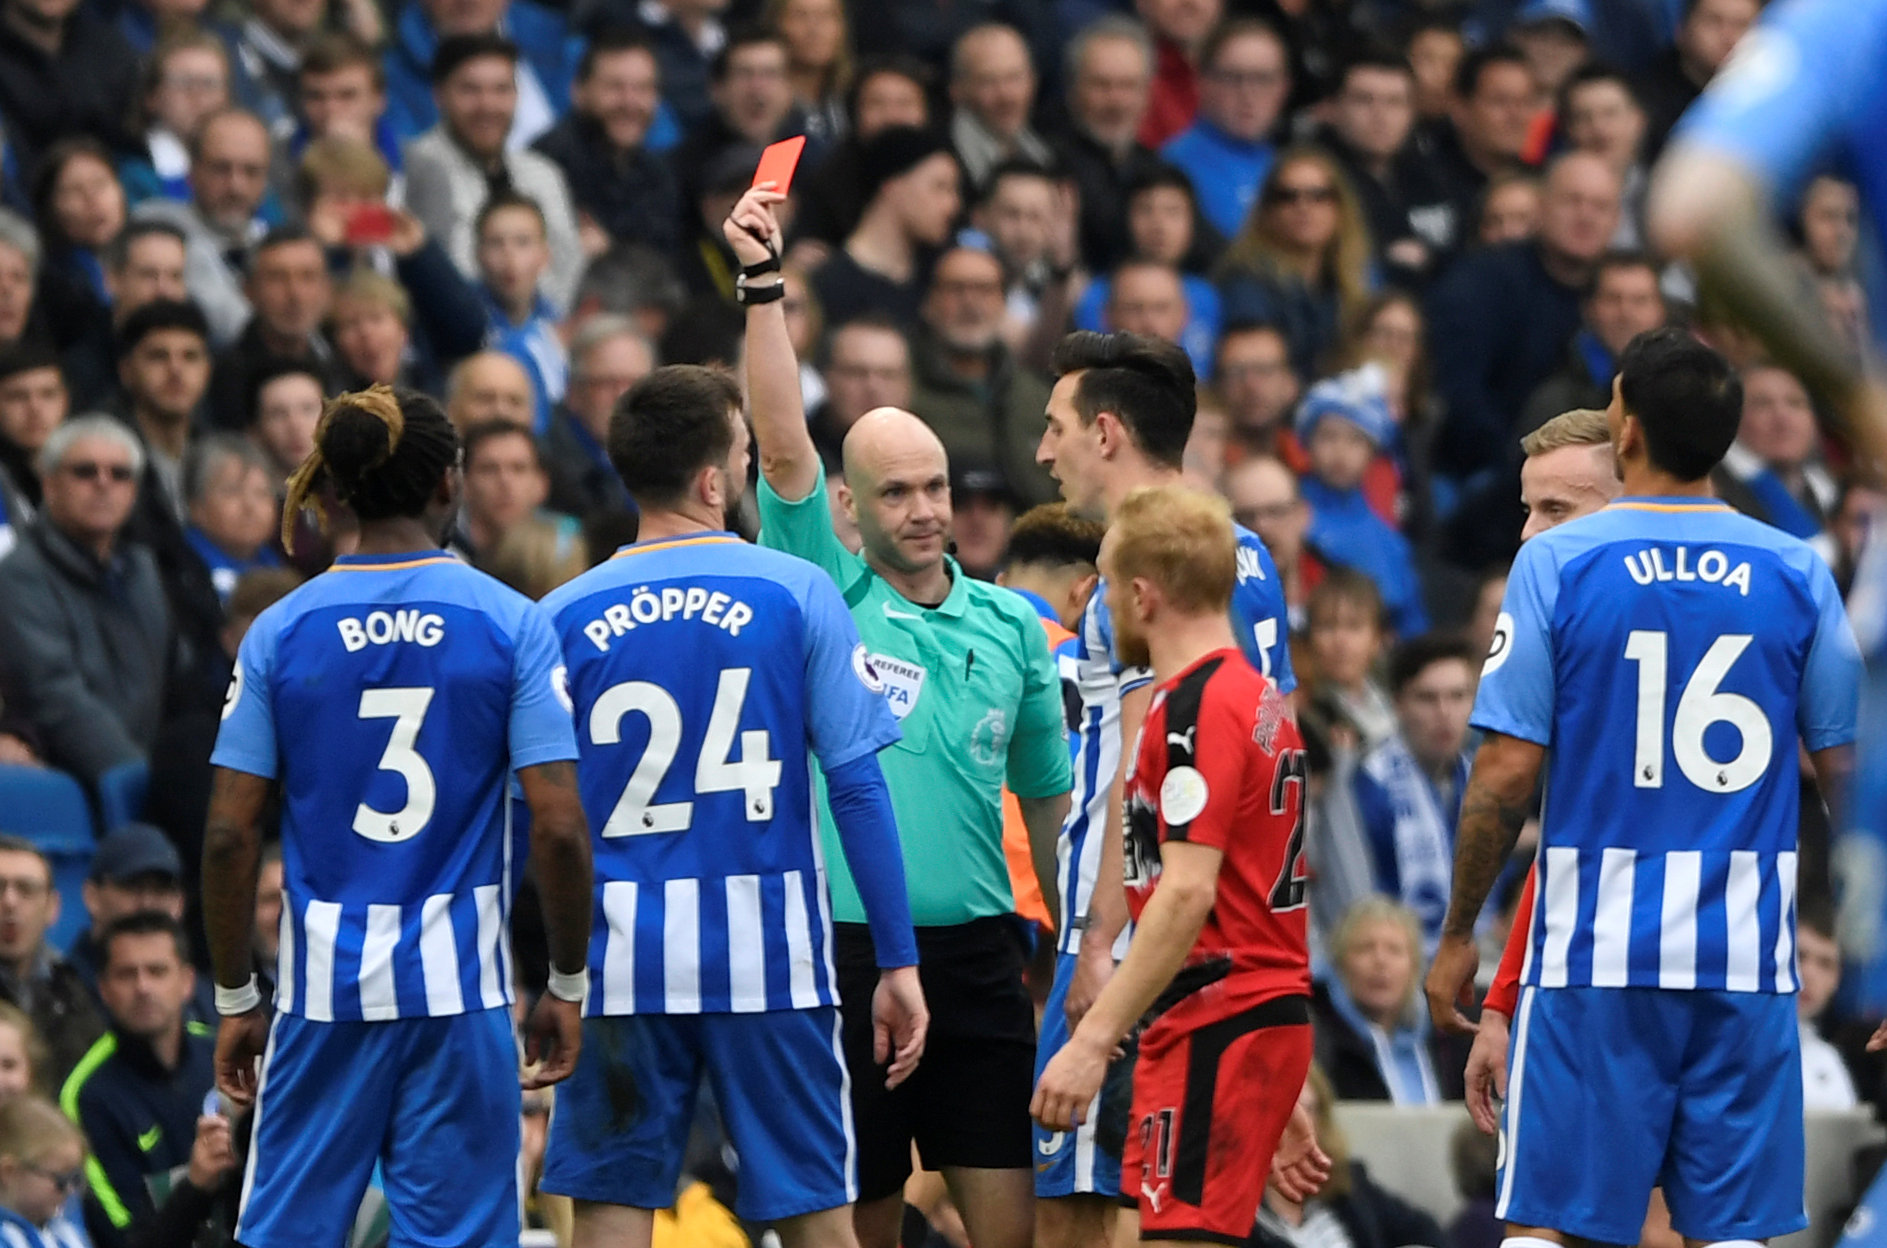 Football: Huddersfield take point against 10-man Brighton